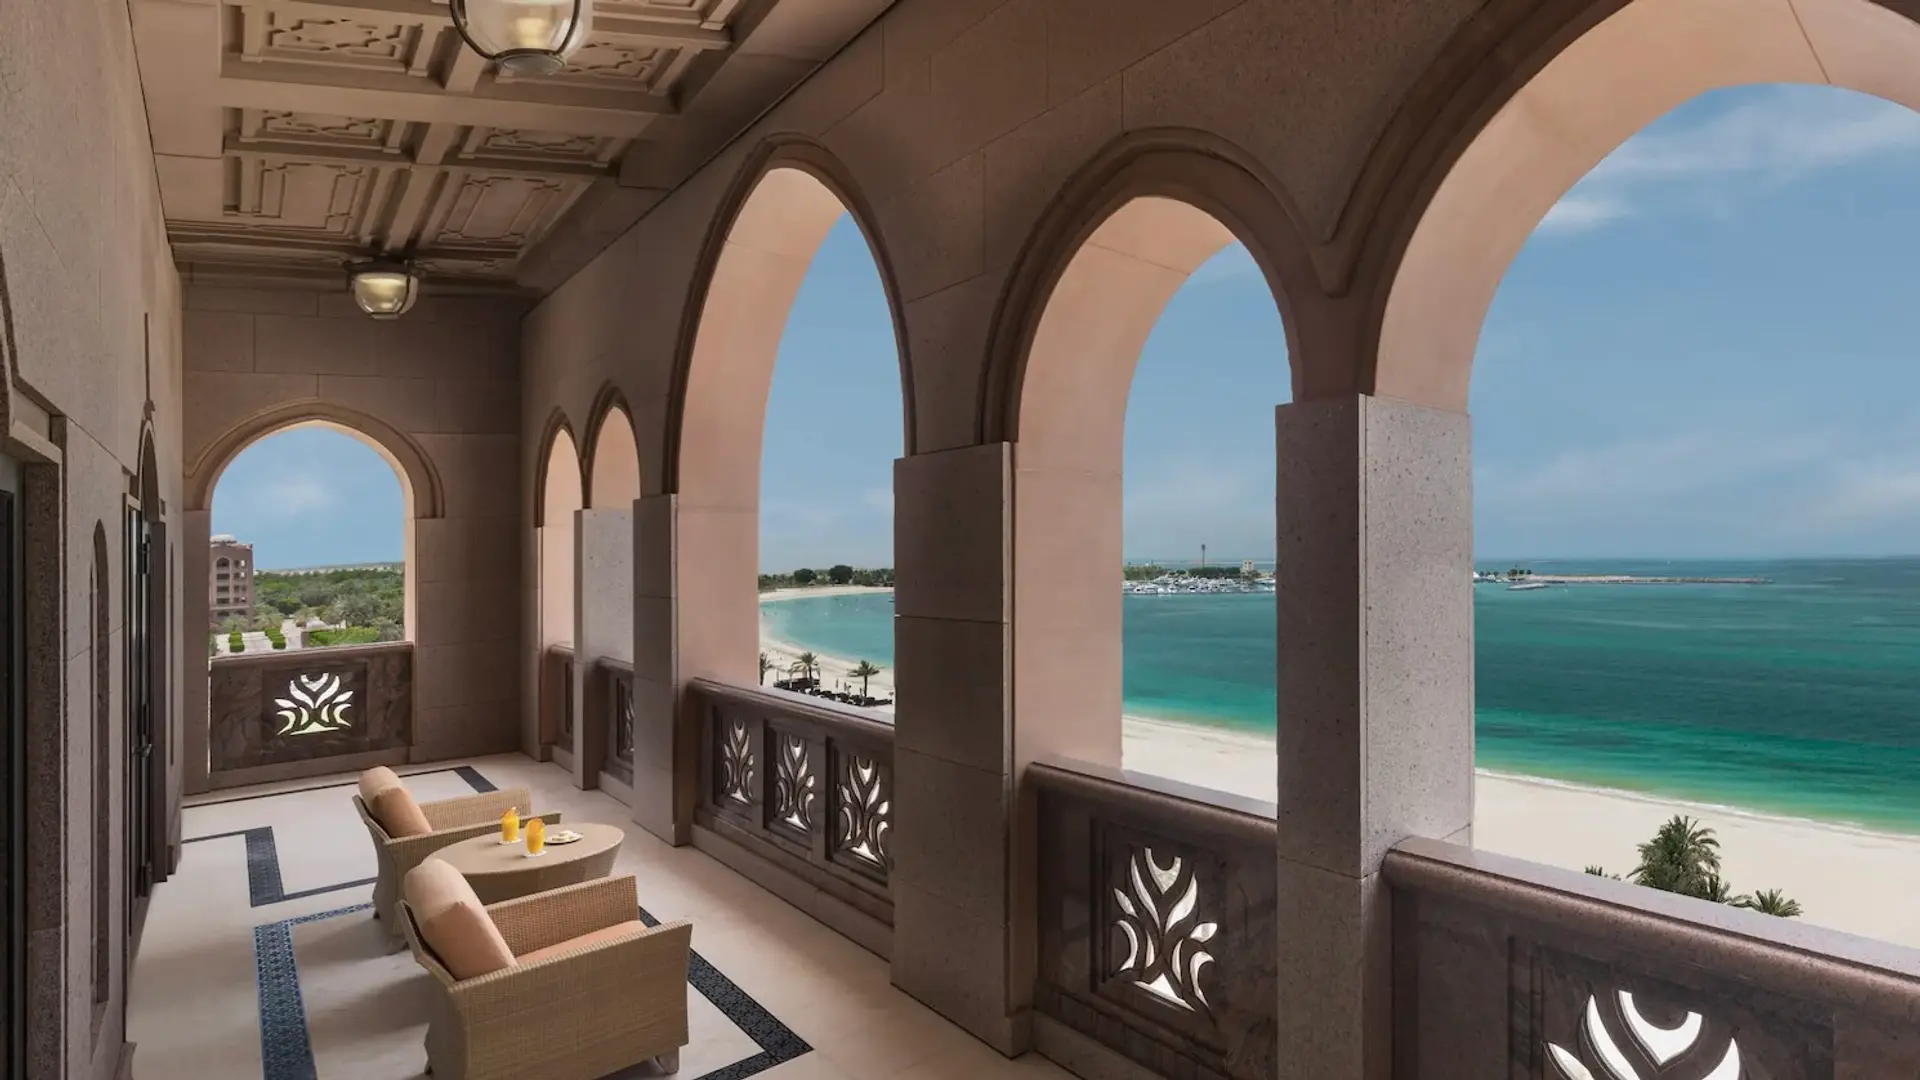 Hotel review Style' - Emirates Palace Mandarin Oriental Abu Dhabi - 1